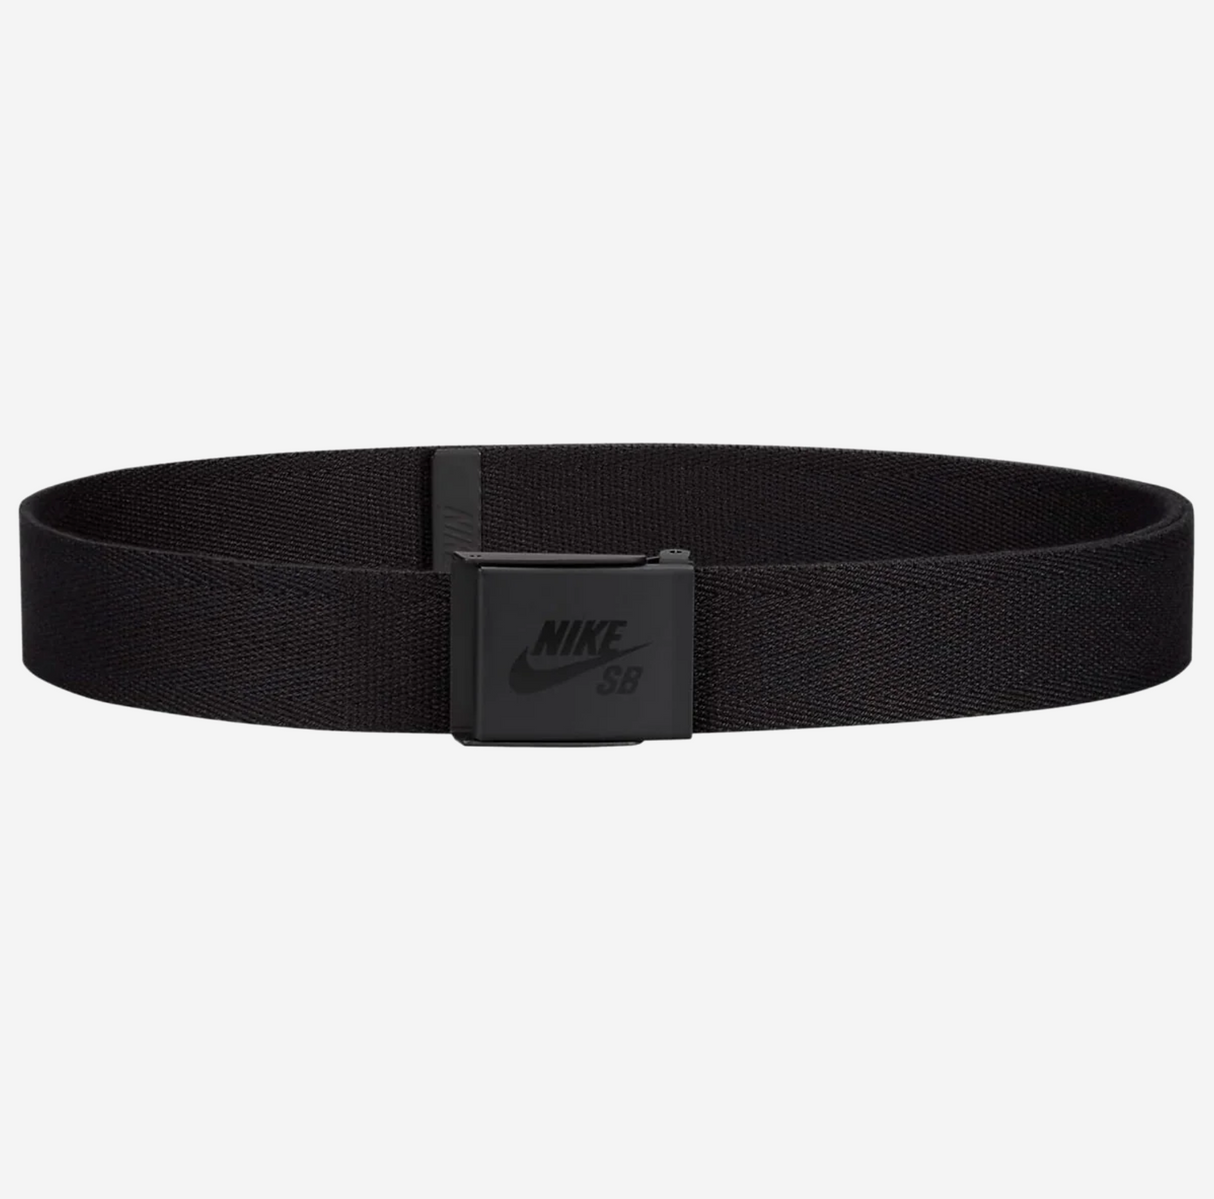 Nike SB Solid Black Web Belt